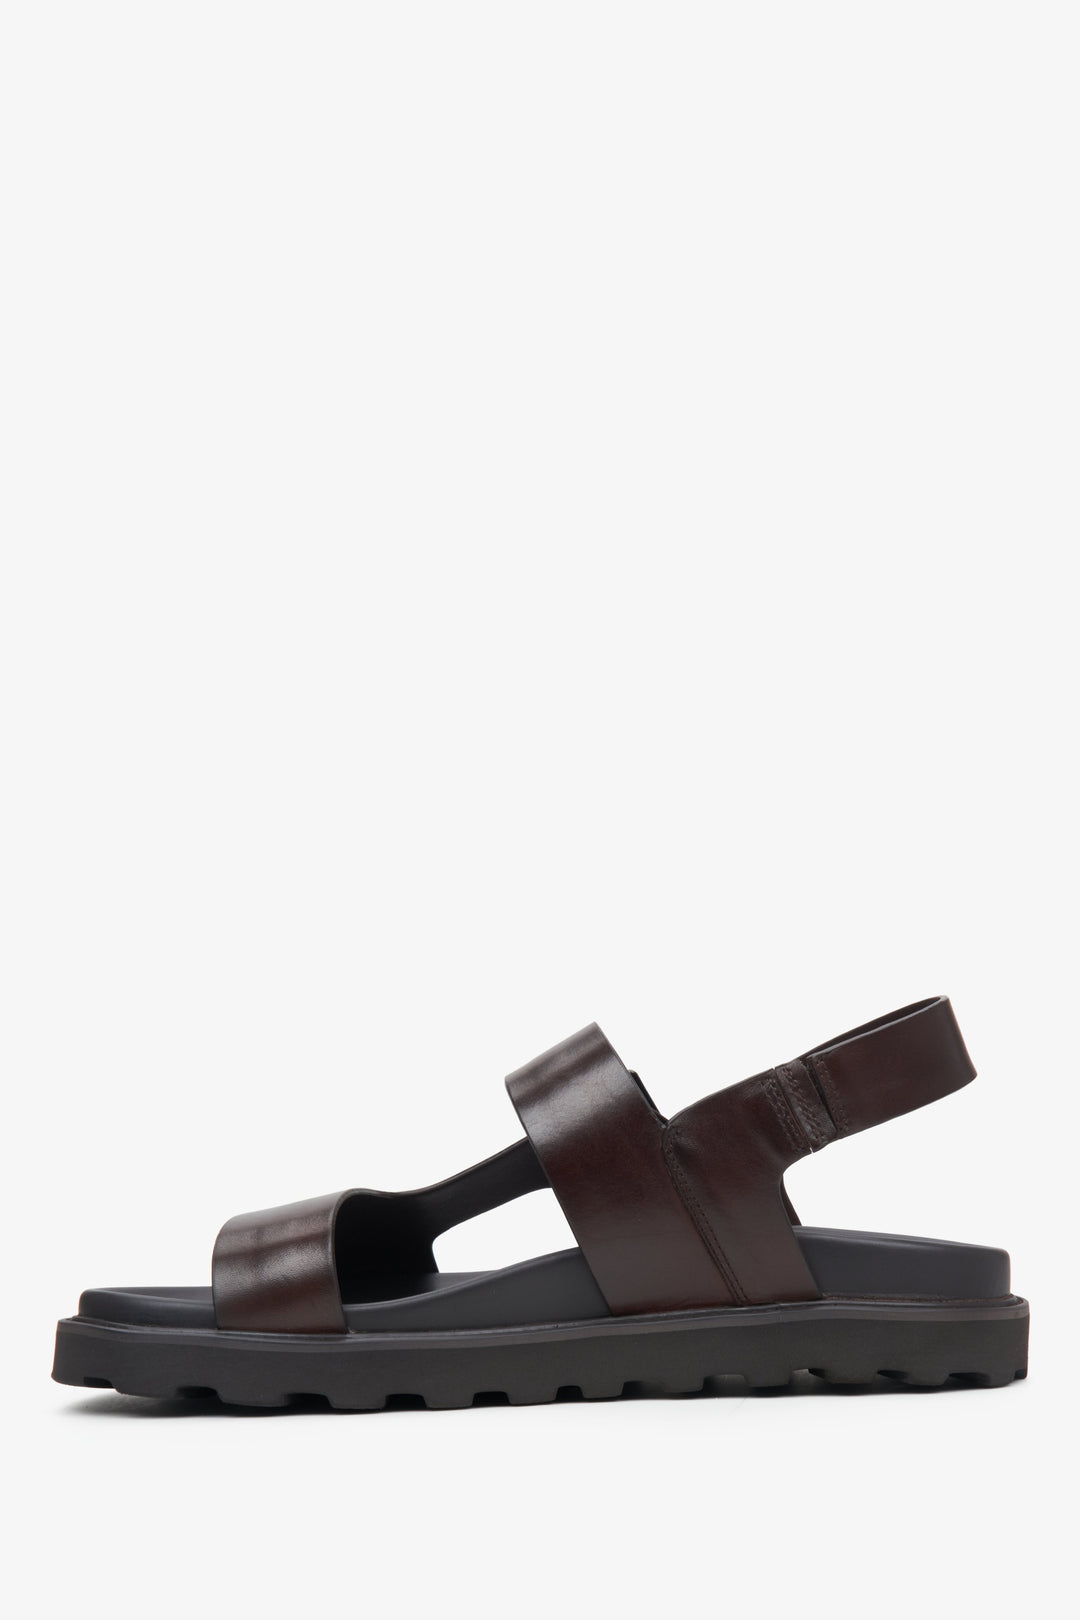 Estro genuine leather men's sandals in saddle brown - shoe profile.